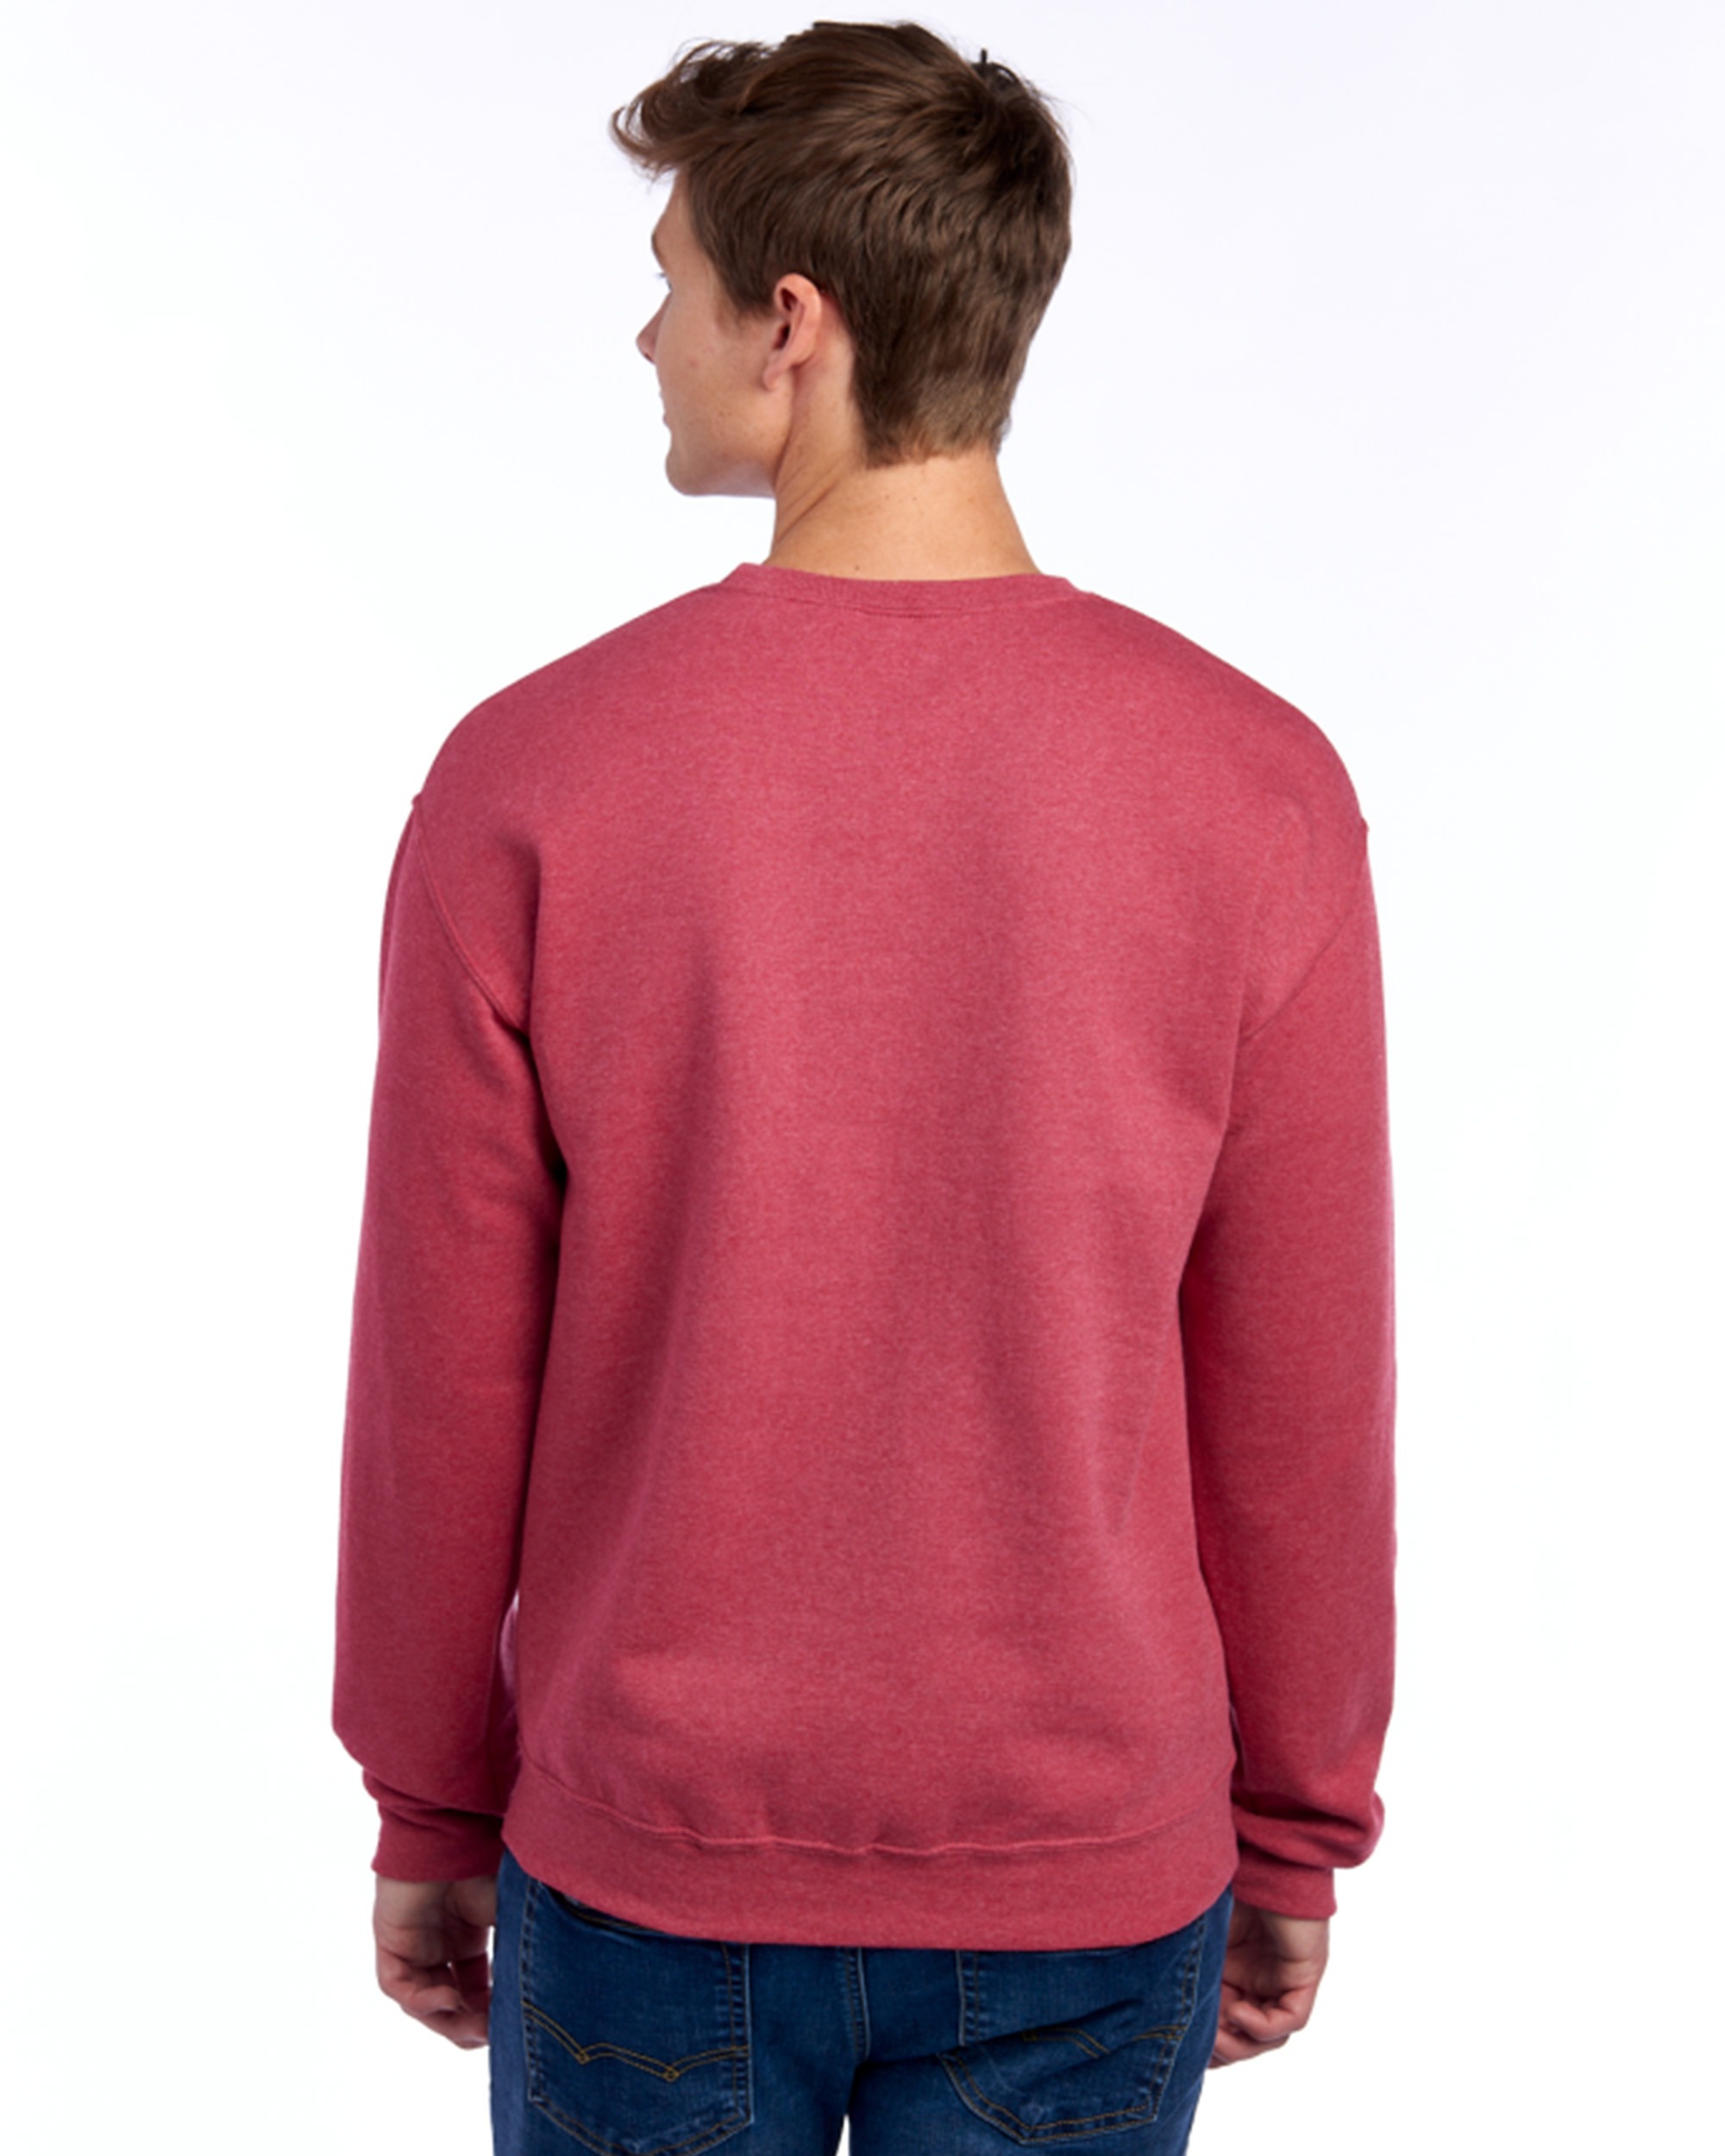 JZ360 - NuBlend® Sweatshirt - One Stop